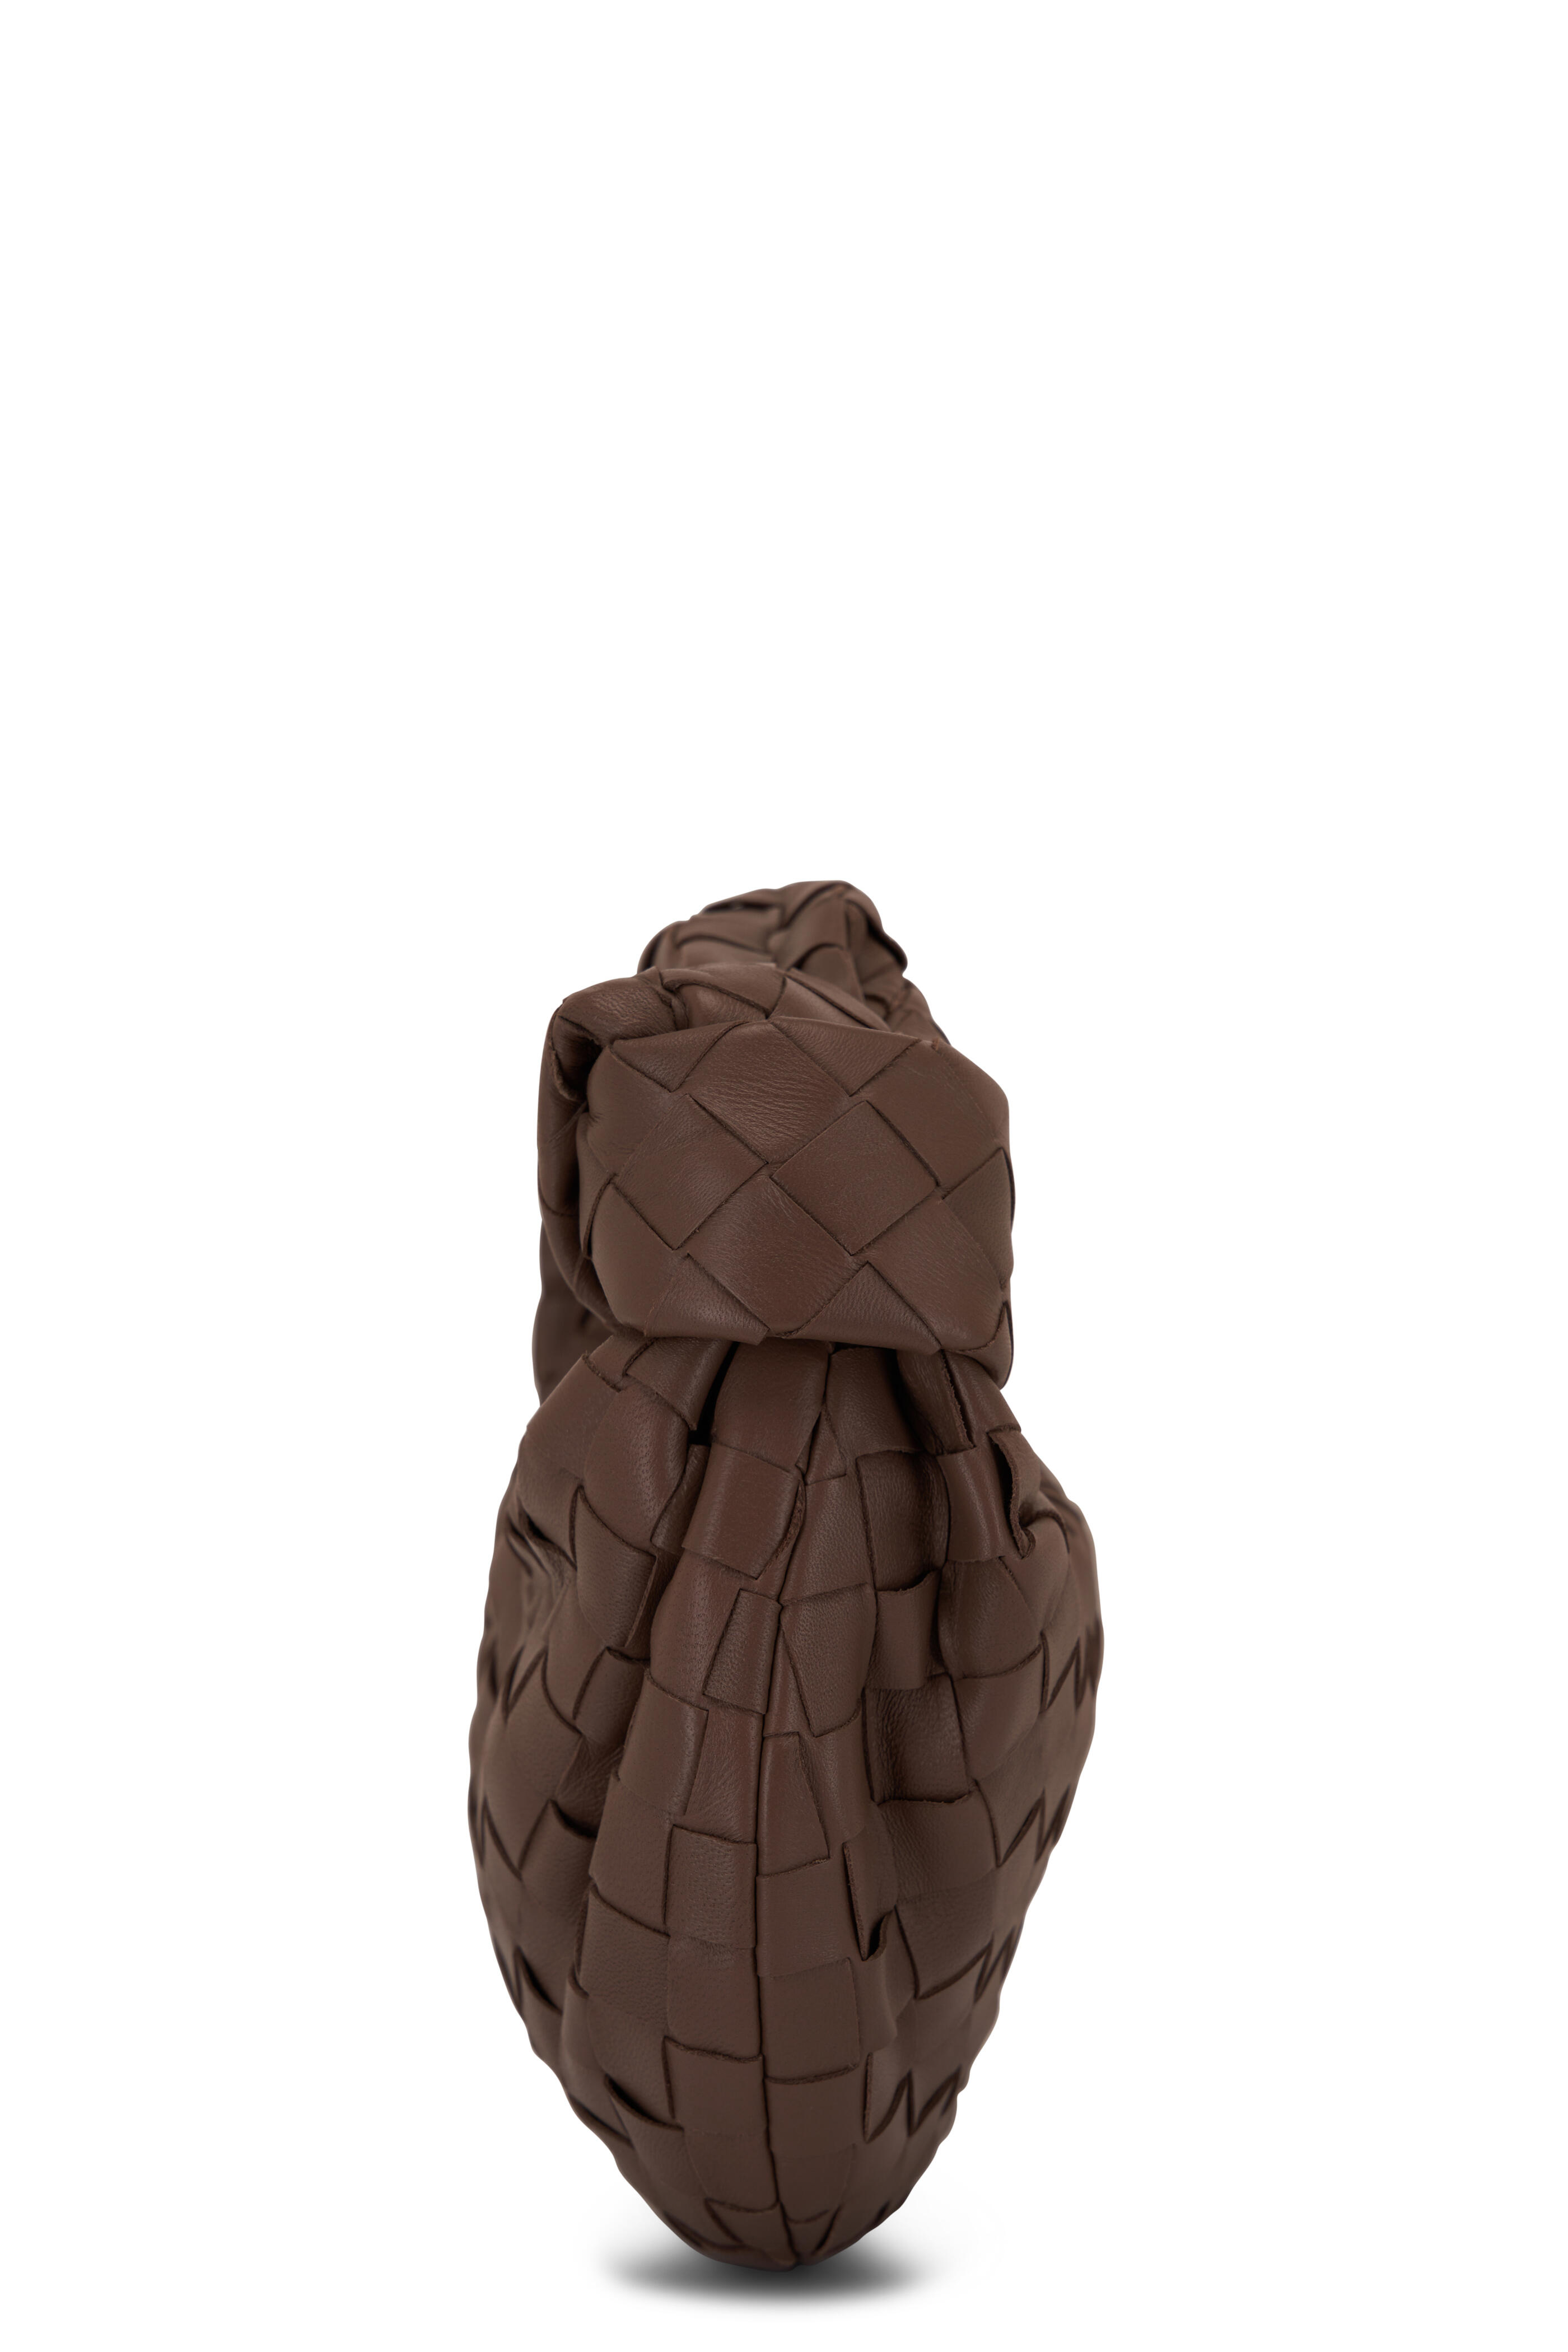 Bottega Veneta Mini Jodie Intrecciato Grape Leather Top Handle Bag